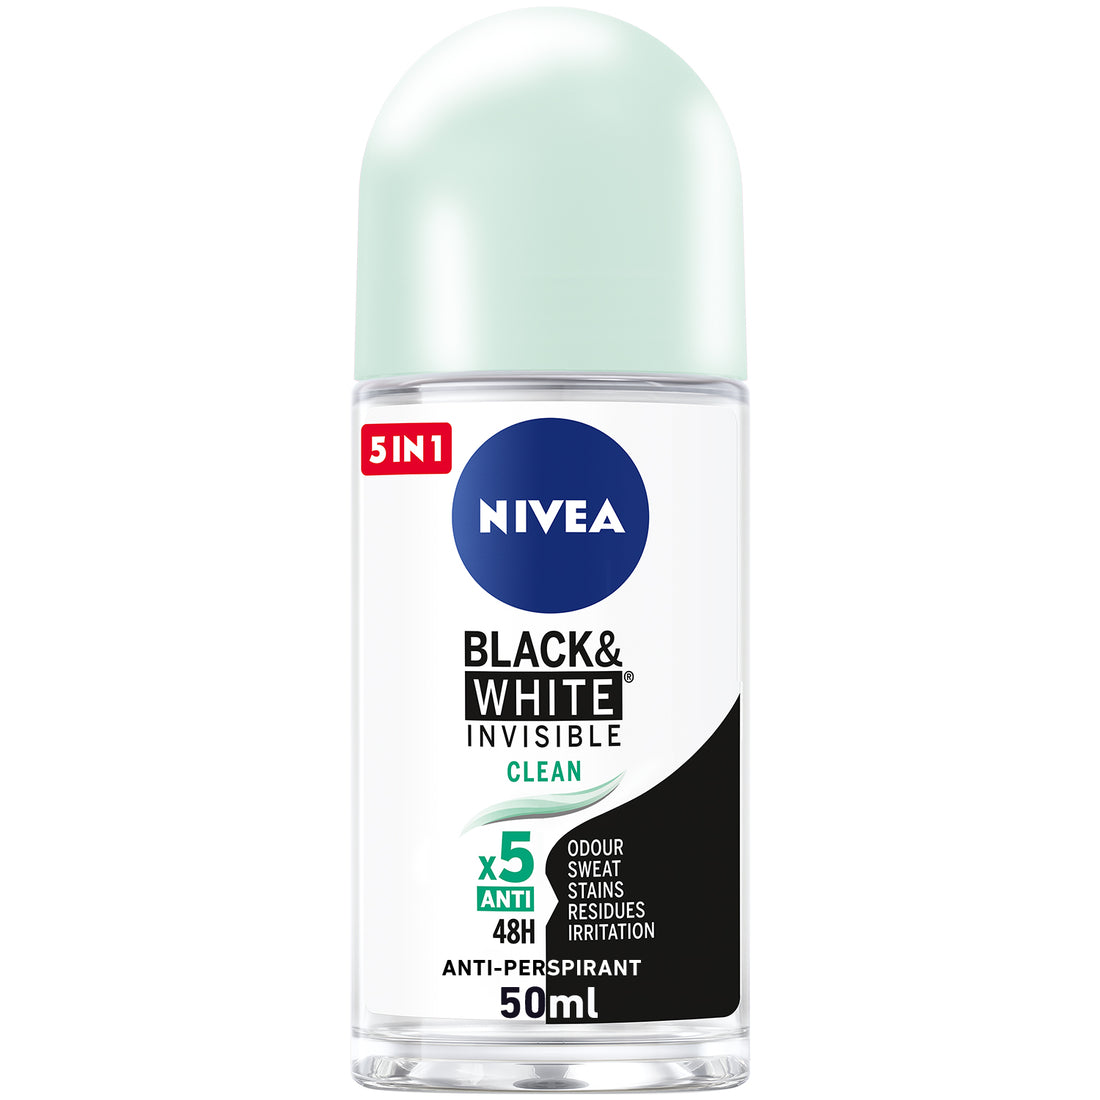 Nivea Black &amp; White Invisible Clean, Antiperspirant for Women, Roll-on 50ml